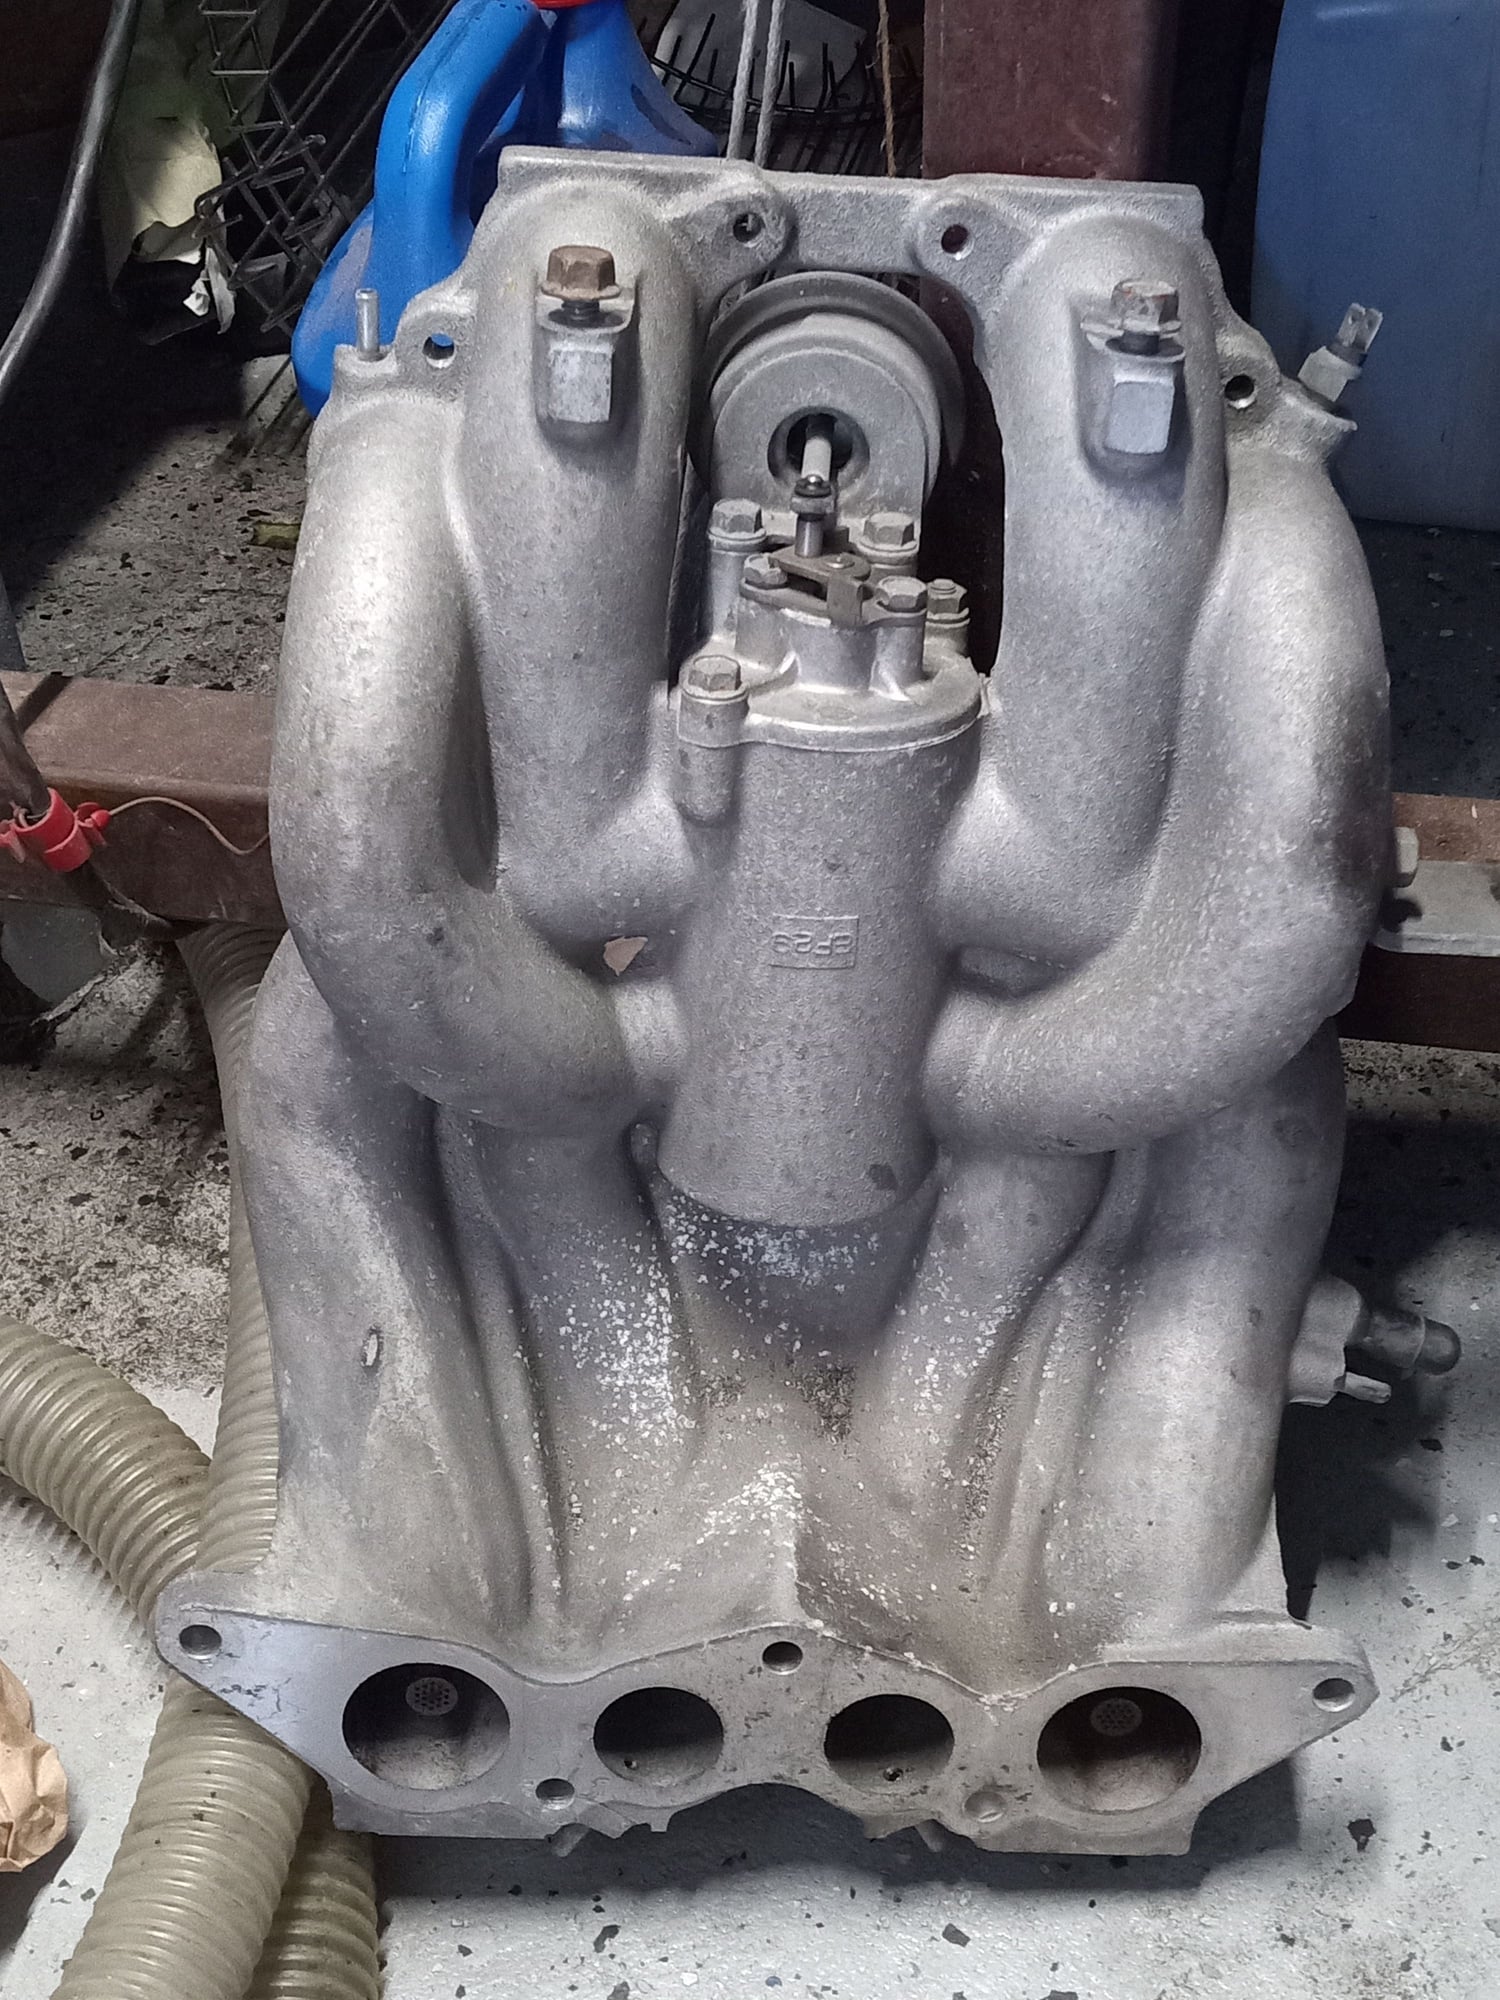 Engine - Intake/Fuel - Second gen intake manifold - Used - 1986 to 1991 Mazda RX-7 - Lancaster, PA 17022, United States